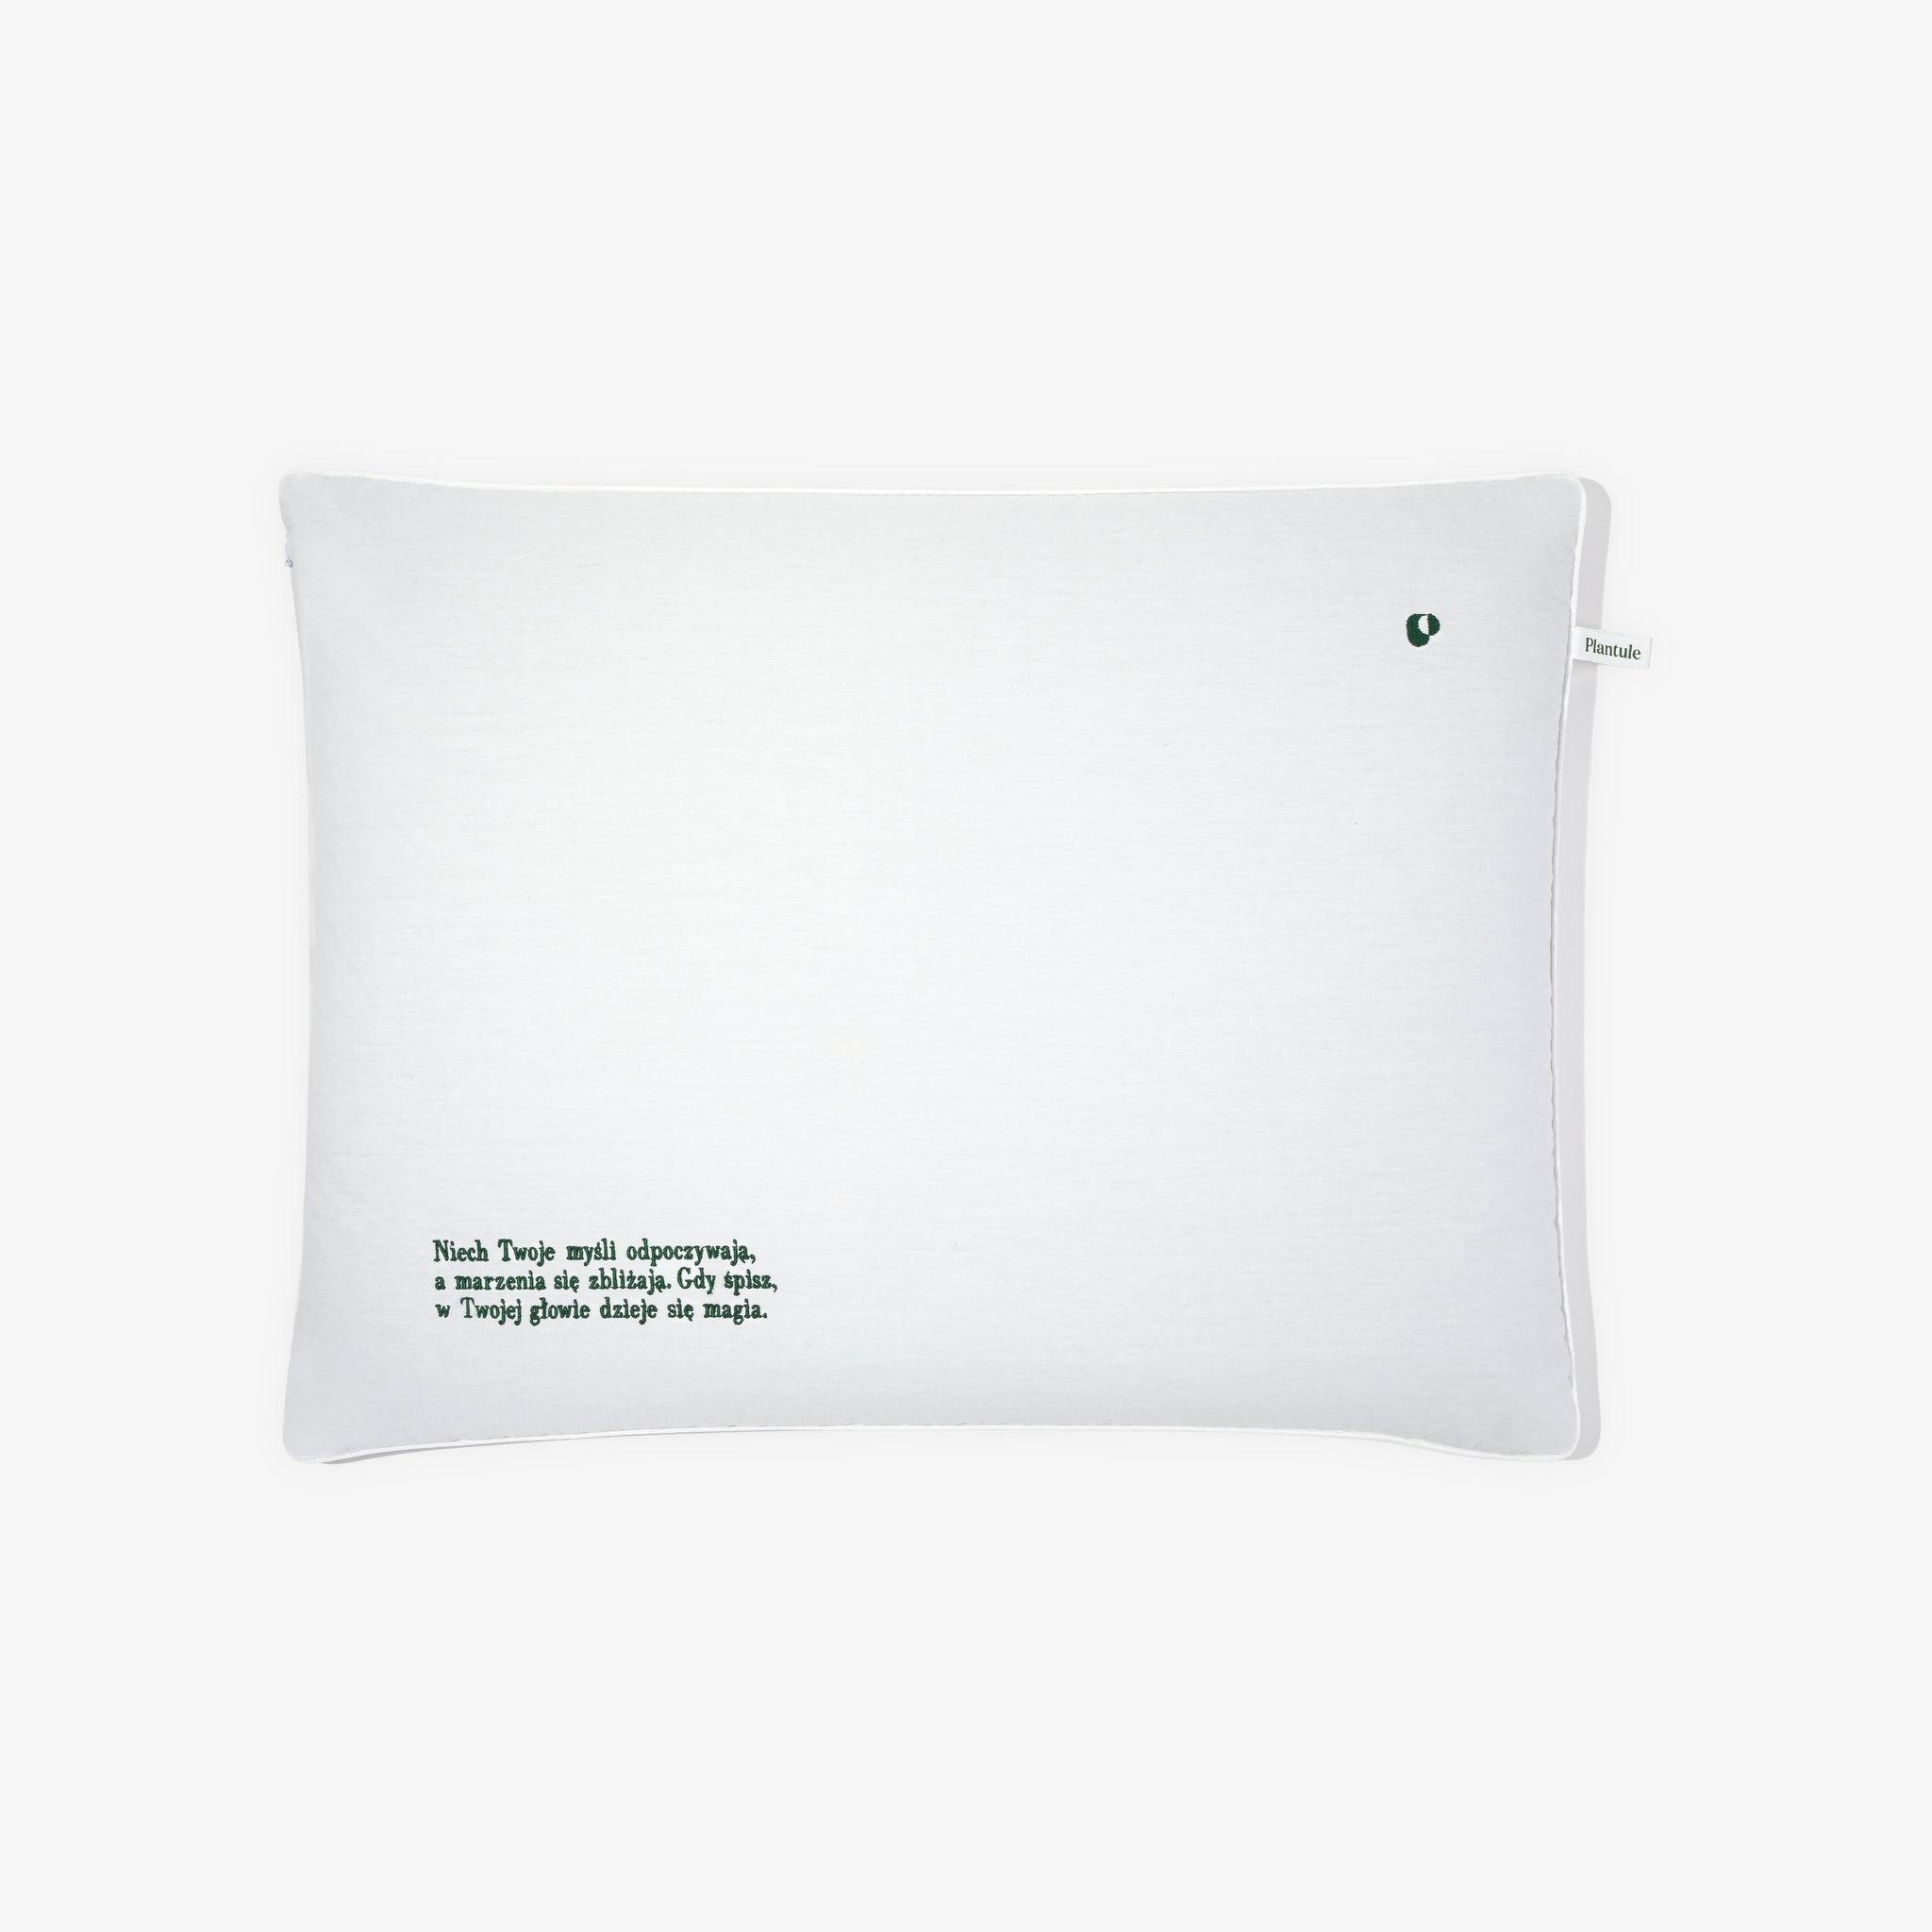 Pillow of Good Dreams "Let your thoughts rest" Plantule x Textual 45x60 cm